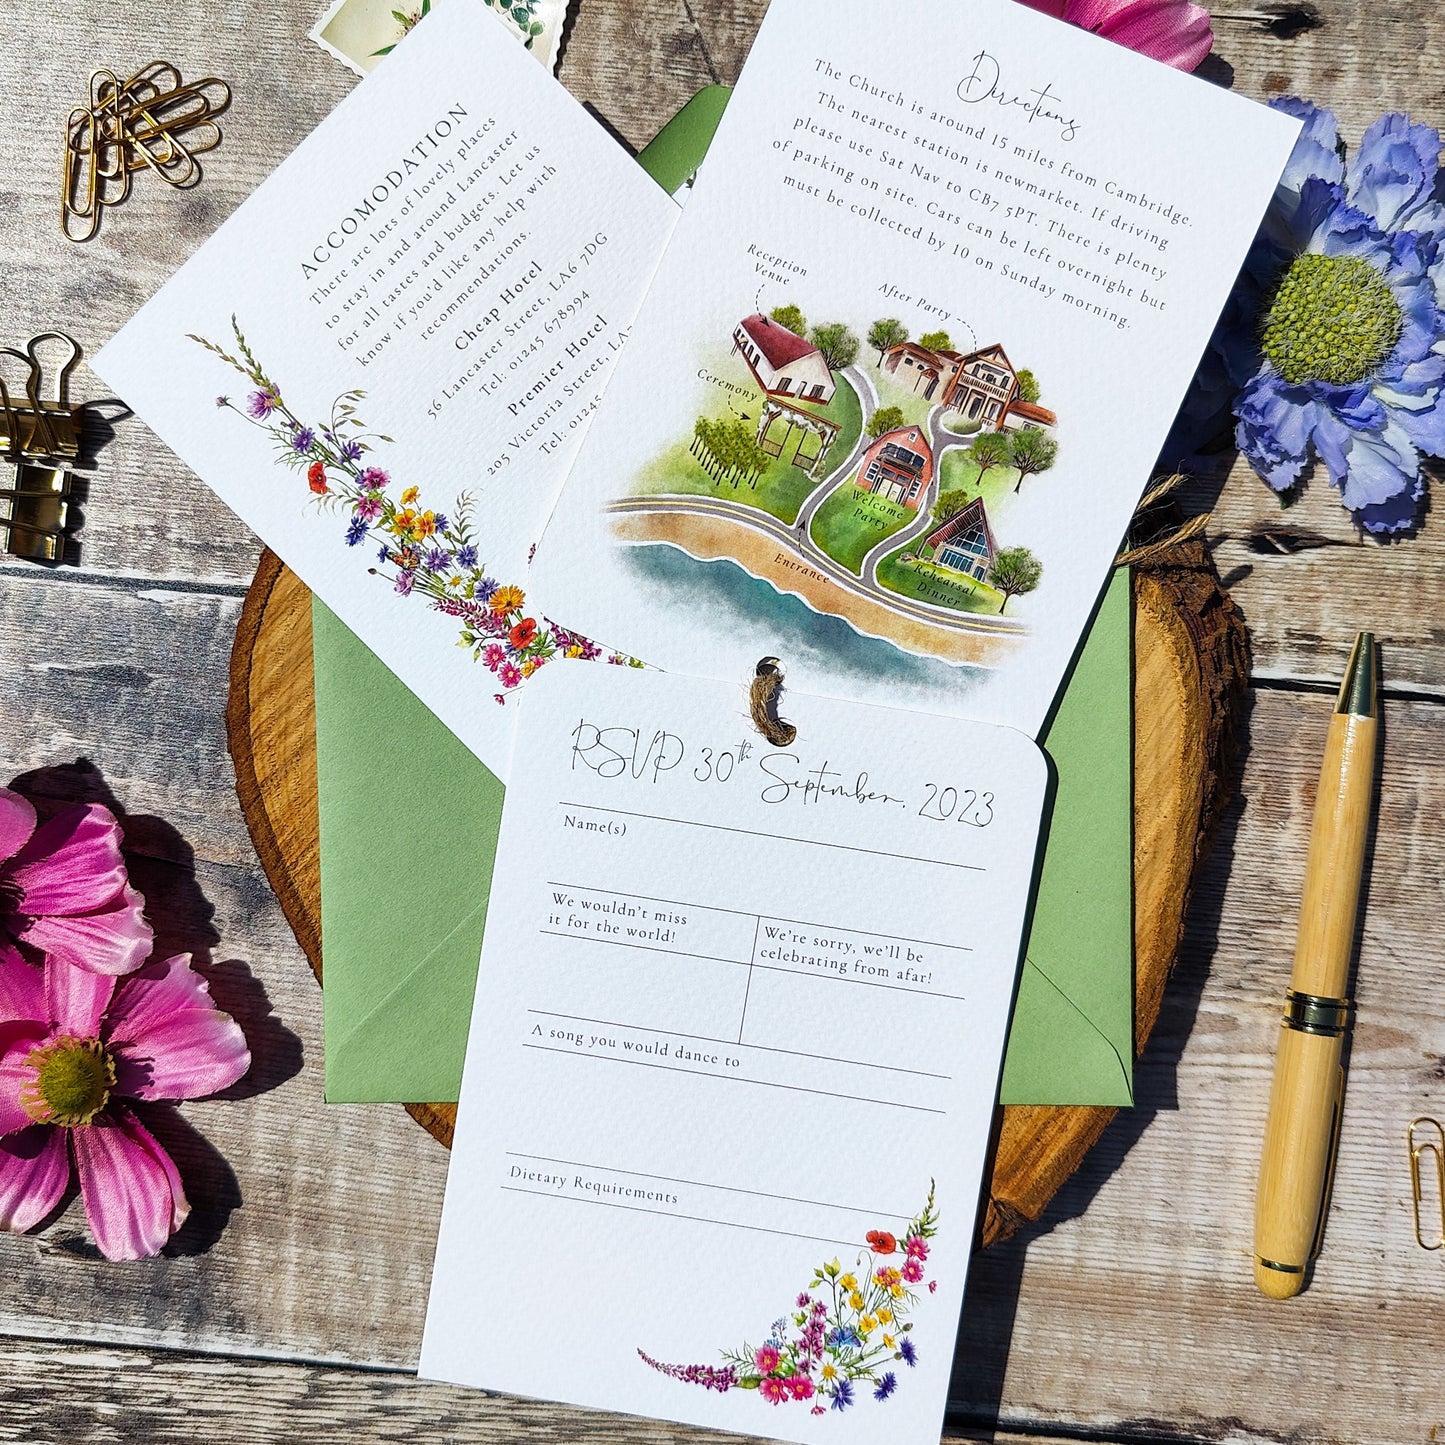 Wildflower Meadow Hand-Tied Wedding Invitation